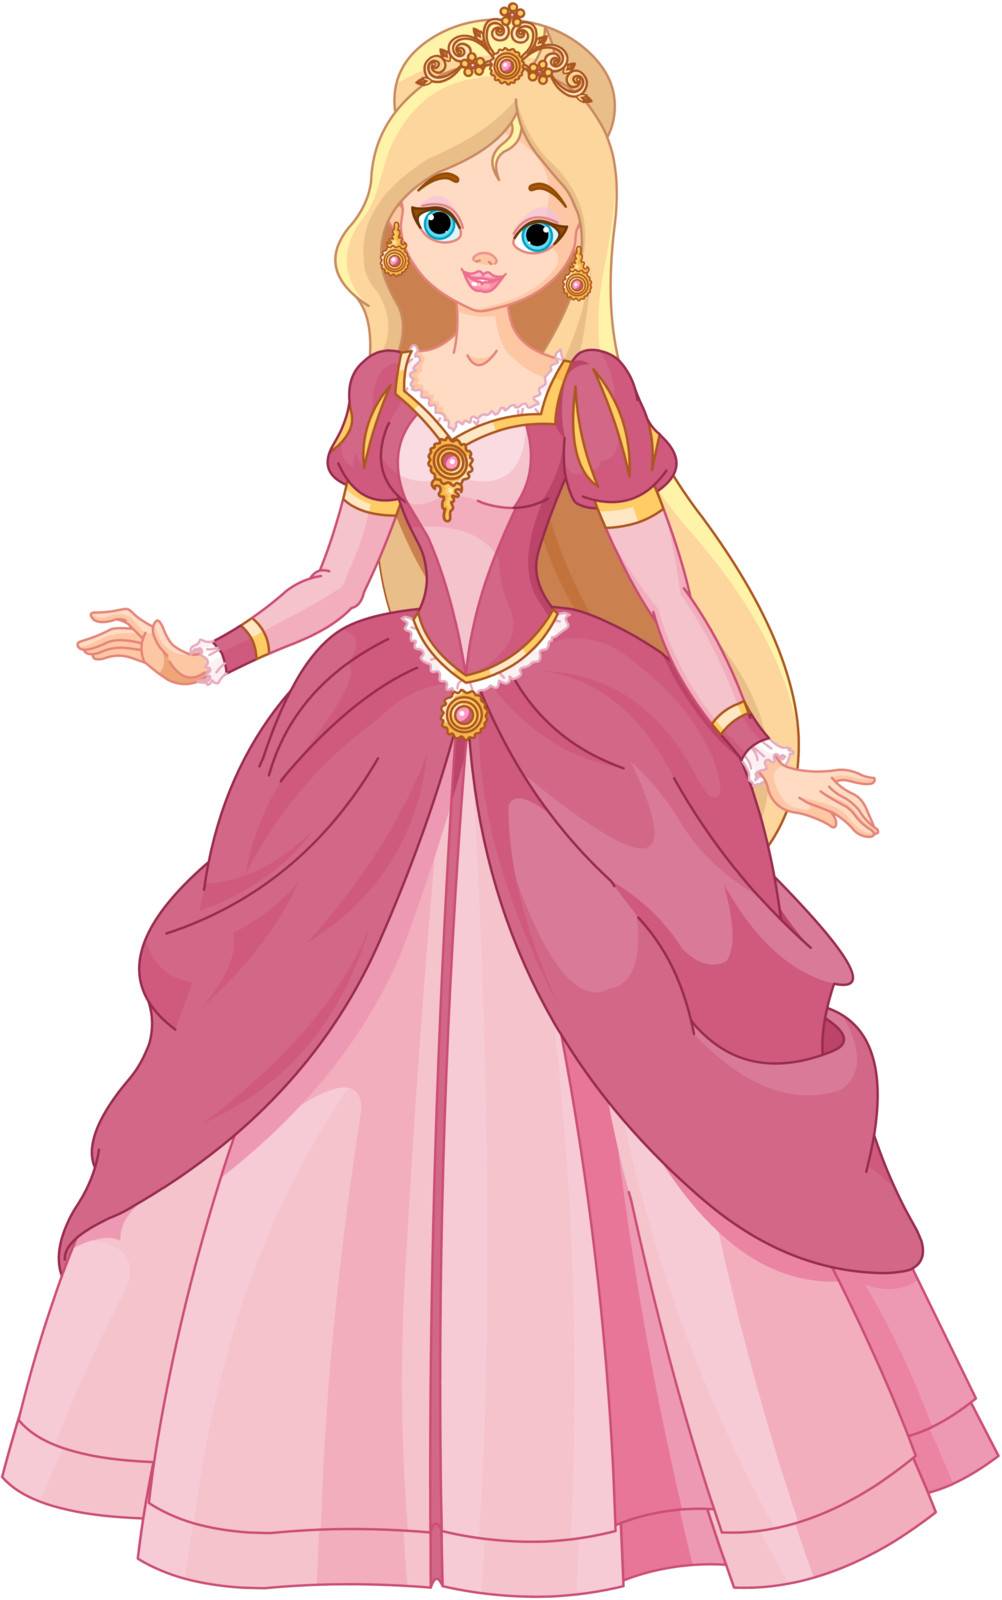 Illustration of  beautiful  princess